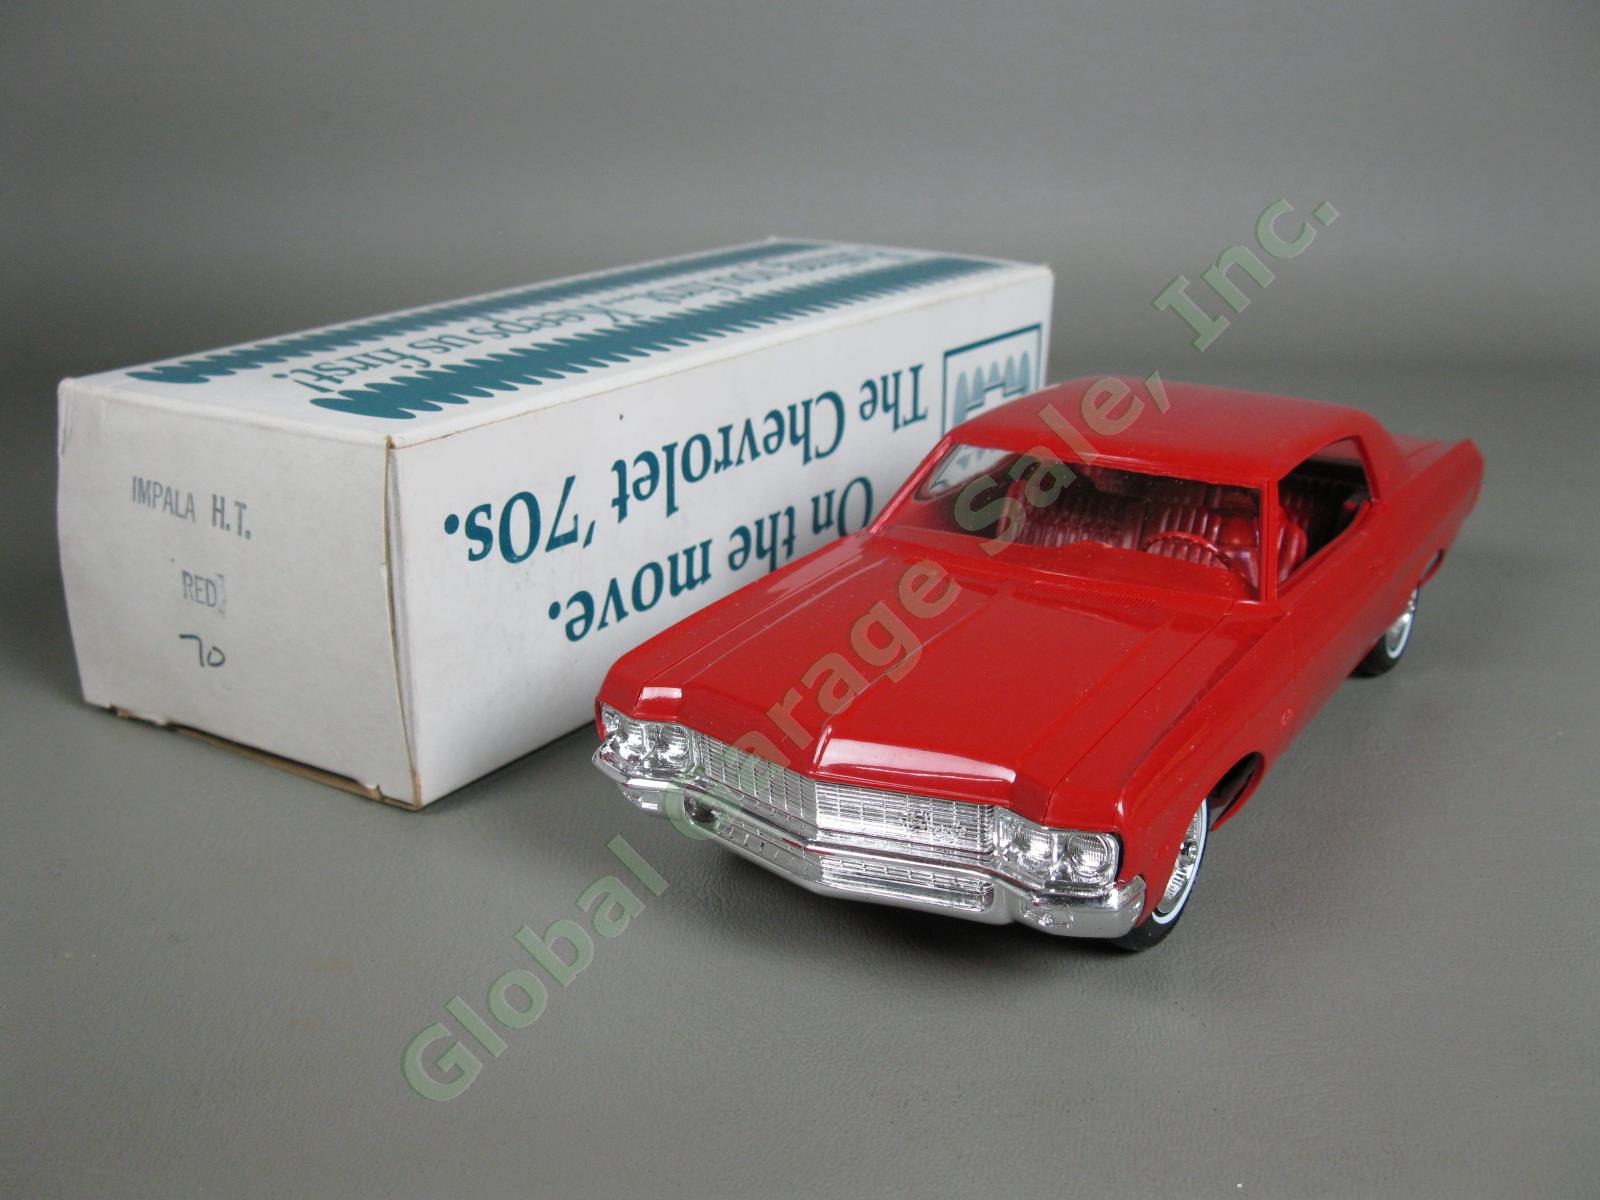 ORIGINAL VTG 1970 Chevrolet Impala 454 Cranberry Hard Top Dealer Promo Model Car